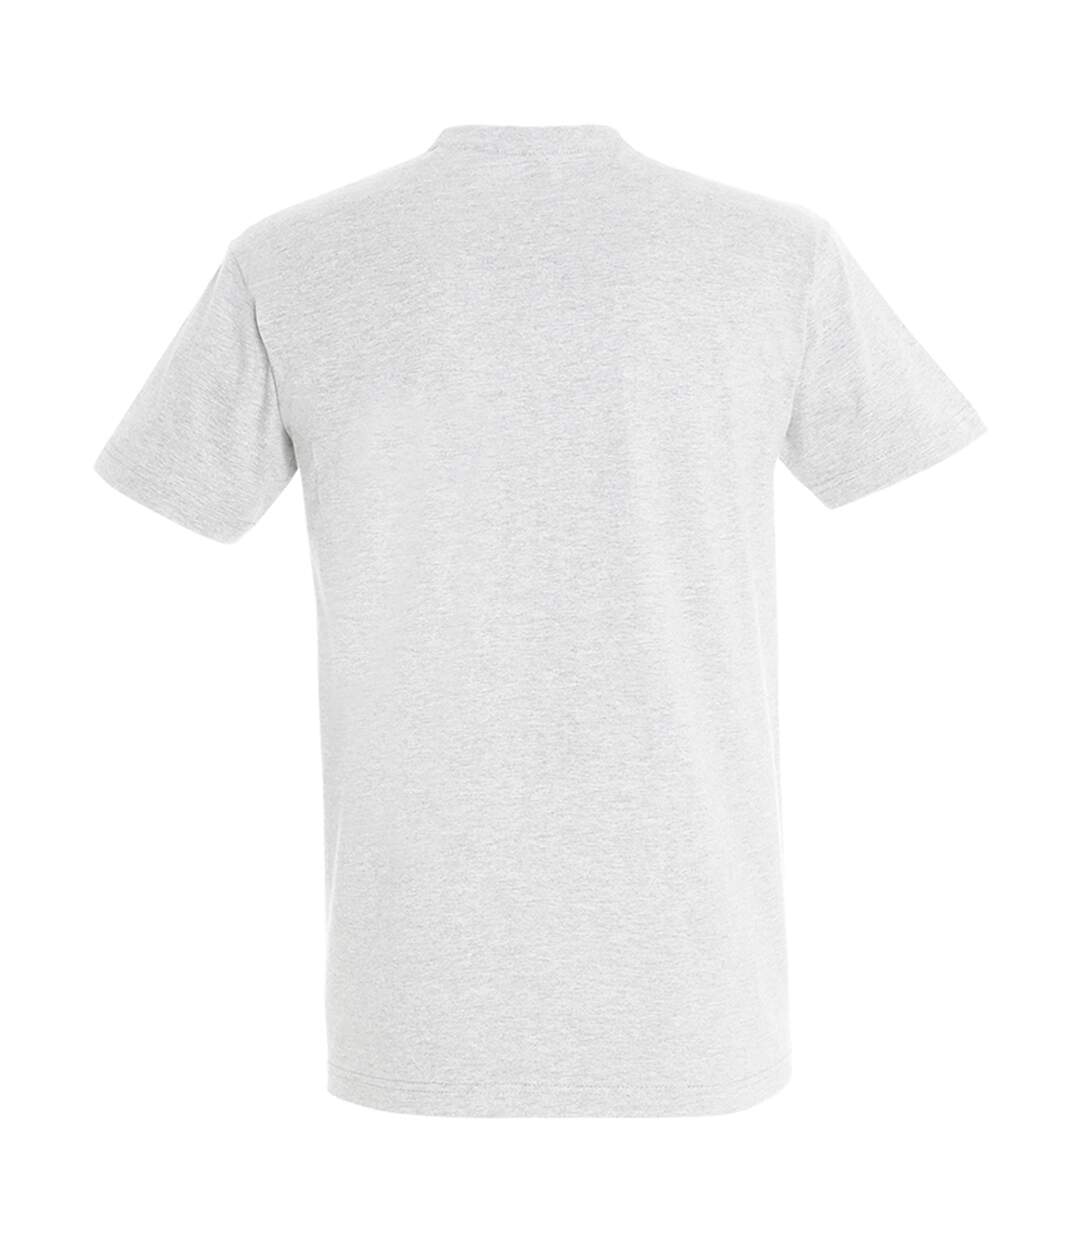 SOLS - T-shirt manches courtes IMPERIAL - Homme (Blanc) - UTPC290